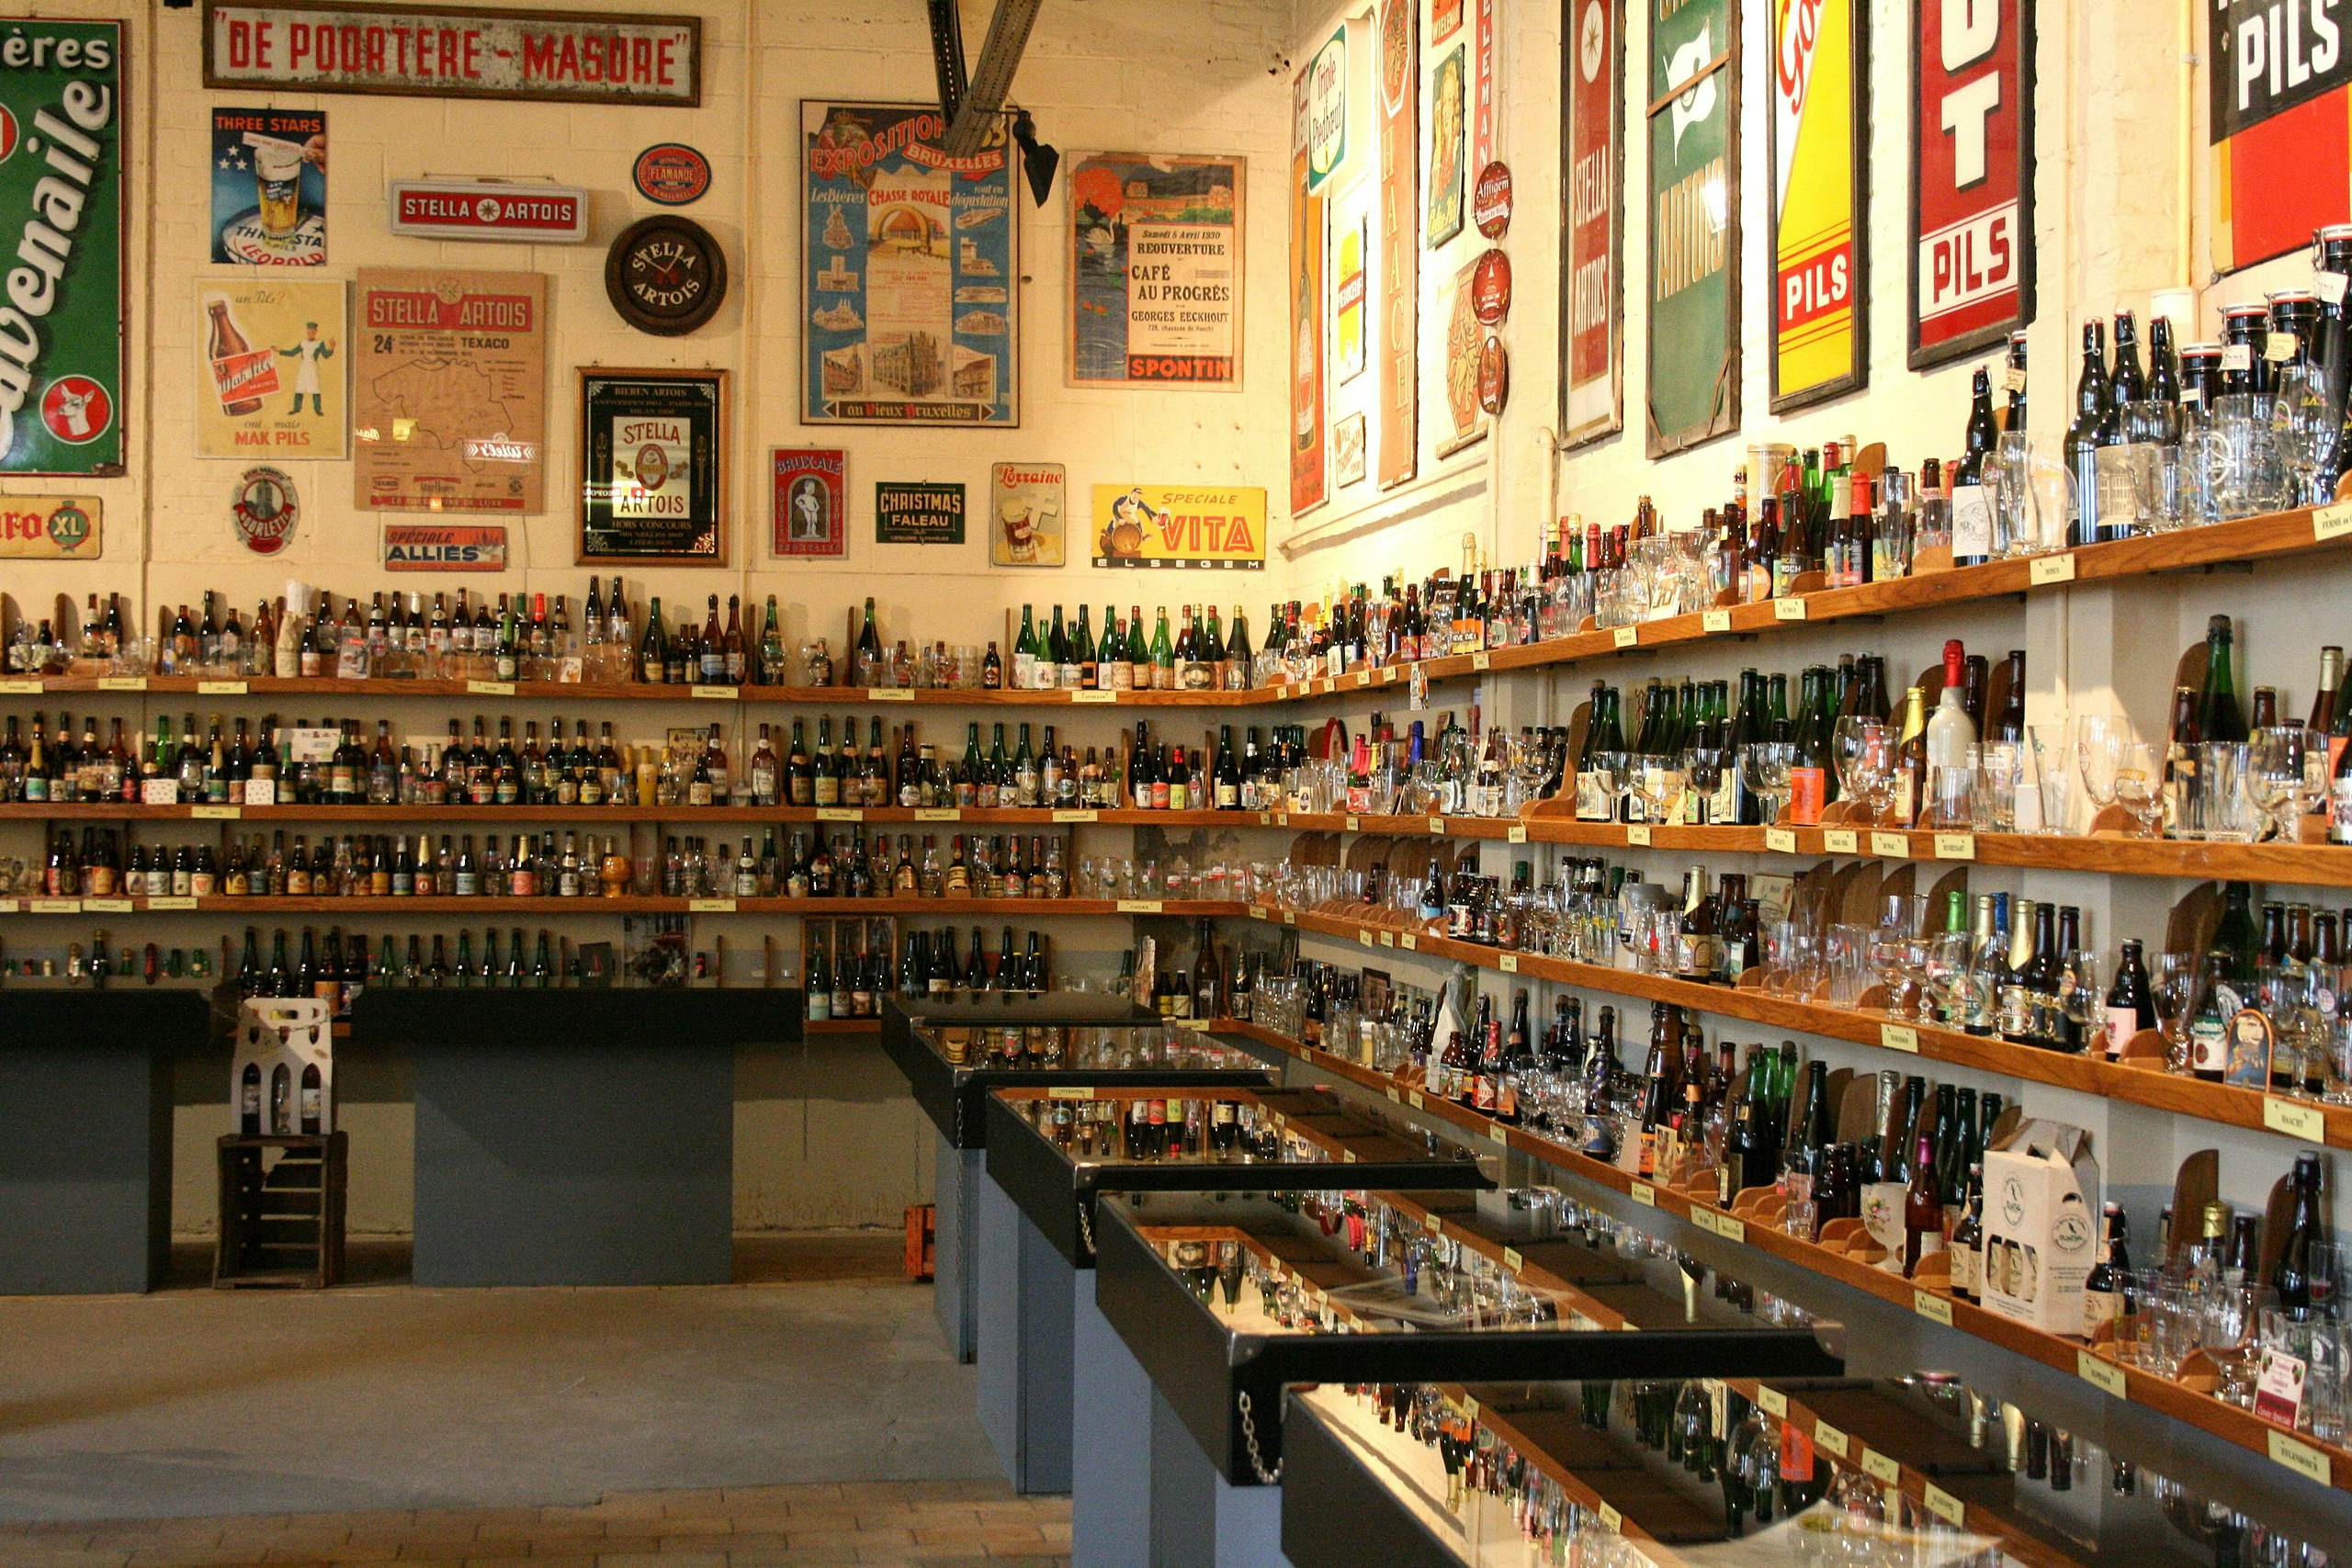 Belgian Brewers Museum